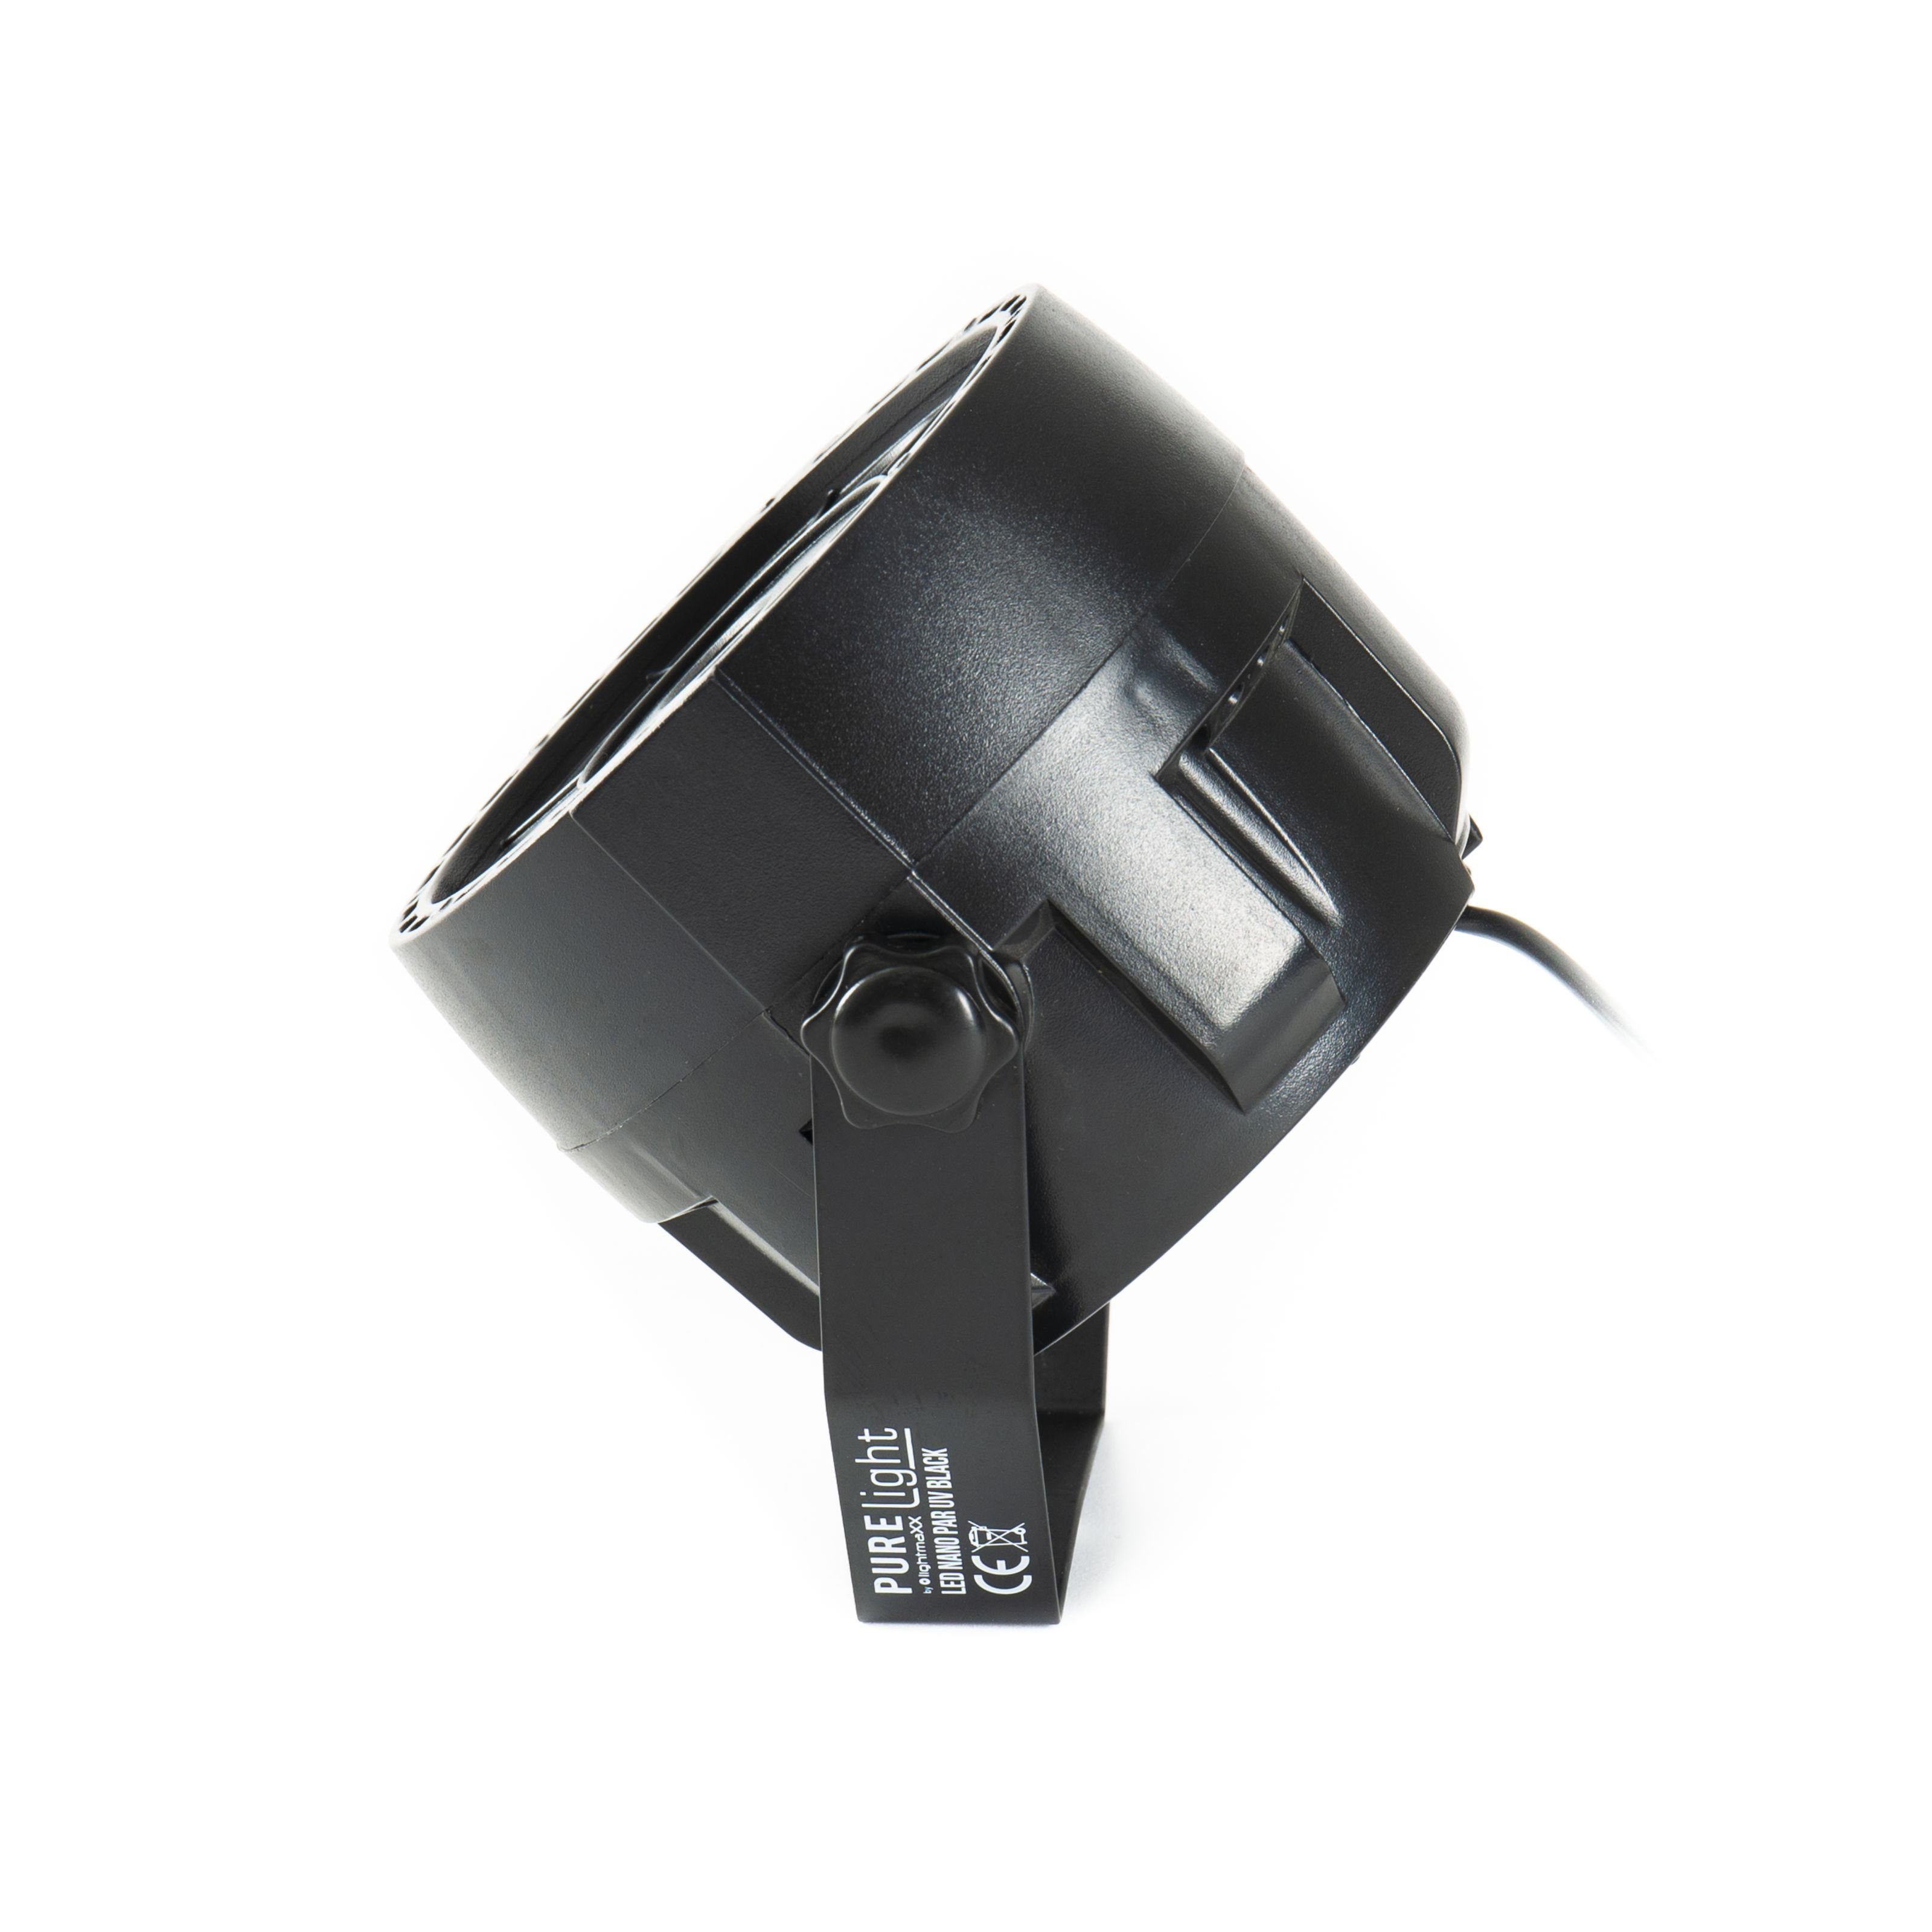 PURElight LED - black PAR Discolicht, LED PAR UV NANO Scheinwerfer UV LED LED 12×1W